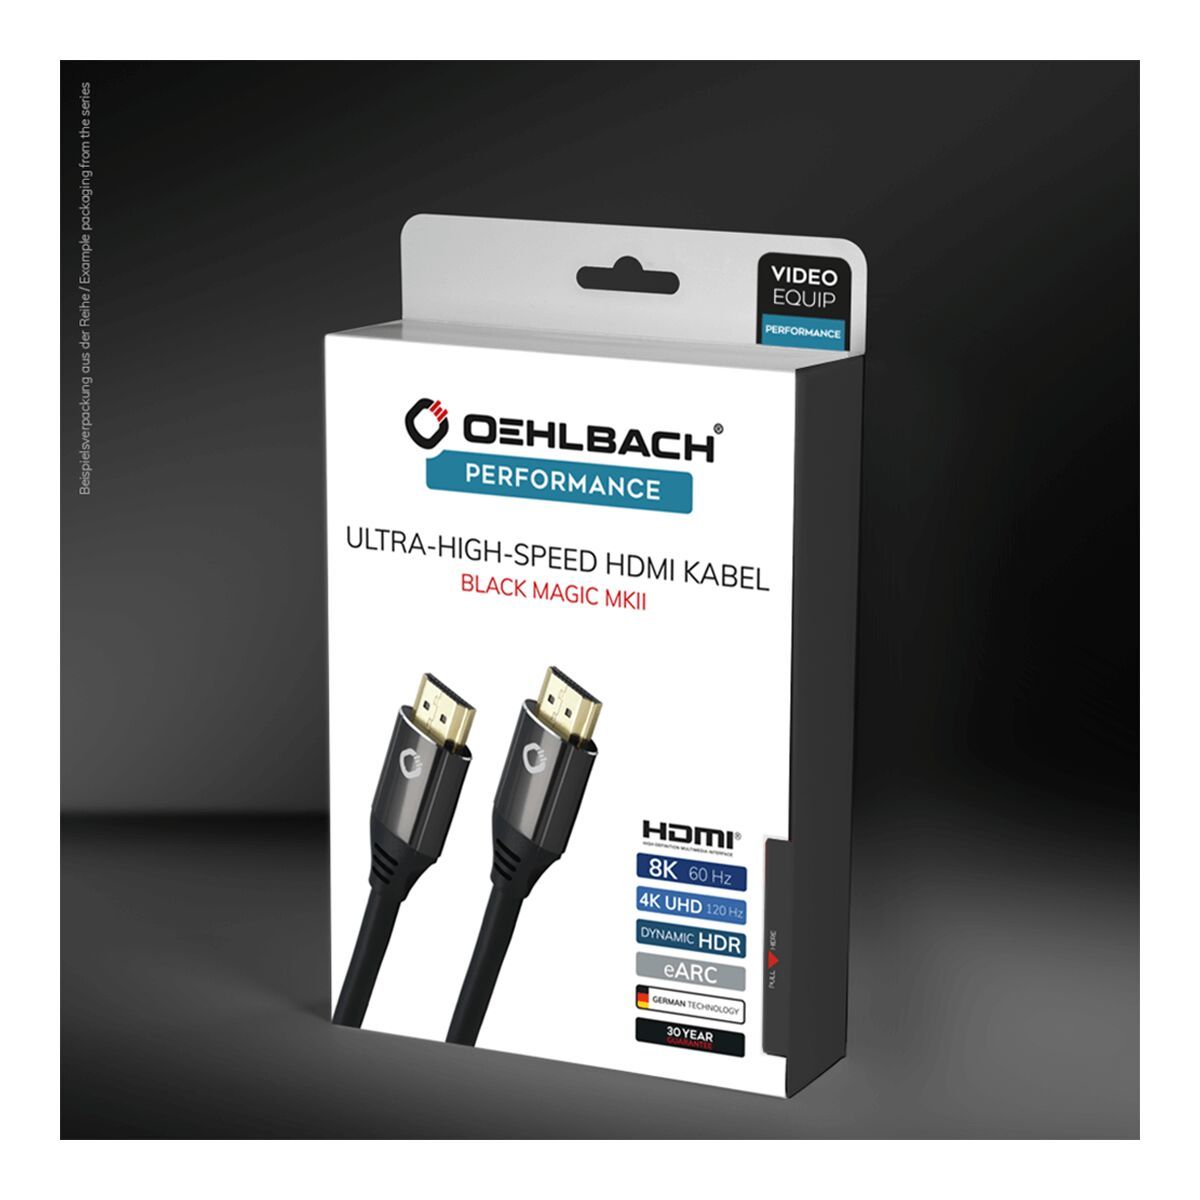 Vogel's Oehlbach Câble HDMI® Black Magic (3 mètres) Noir Pack shot 3D